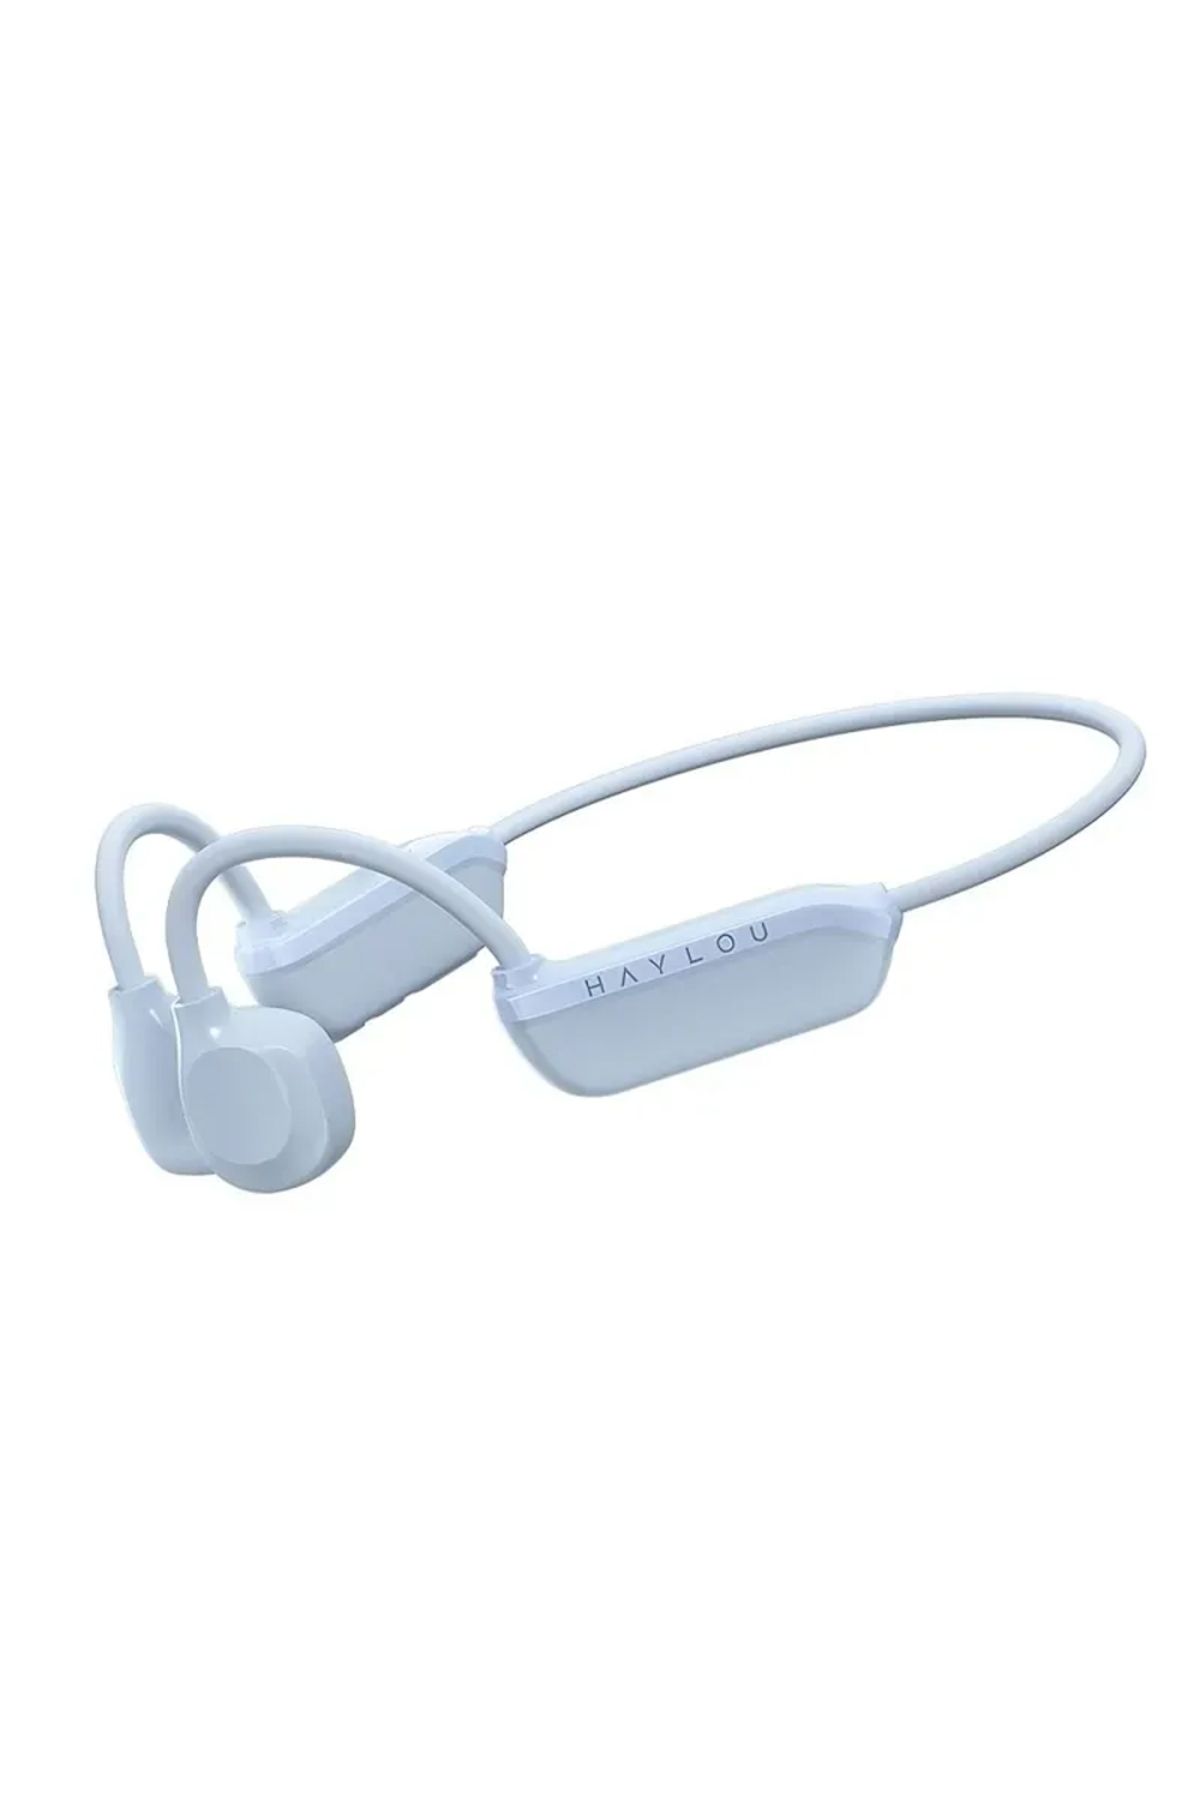 Haylou PurFree Lite BC04 Kemik İletimli Kablosuz Bluetooth Kulaklık Mavi (Haylou Türkiye Garantili)